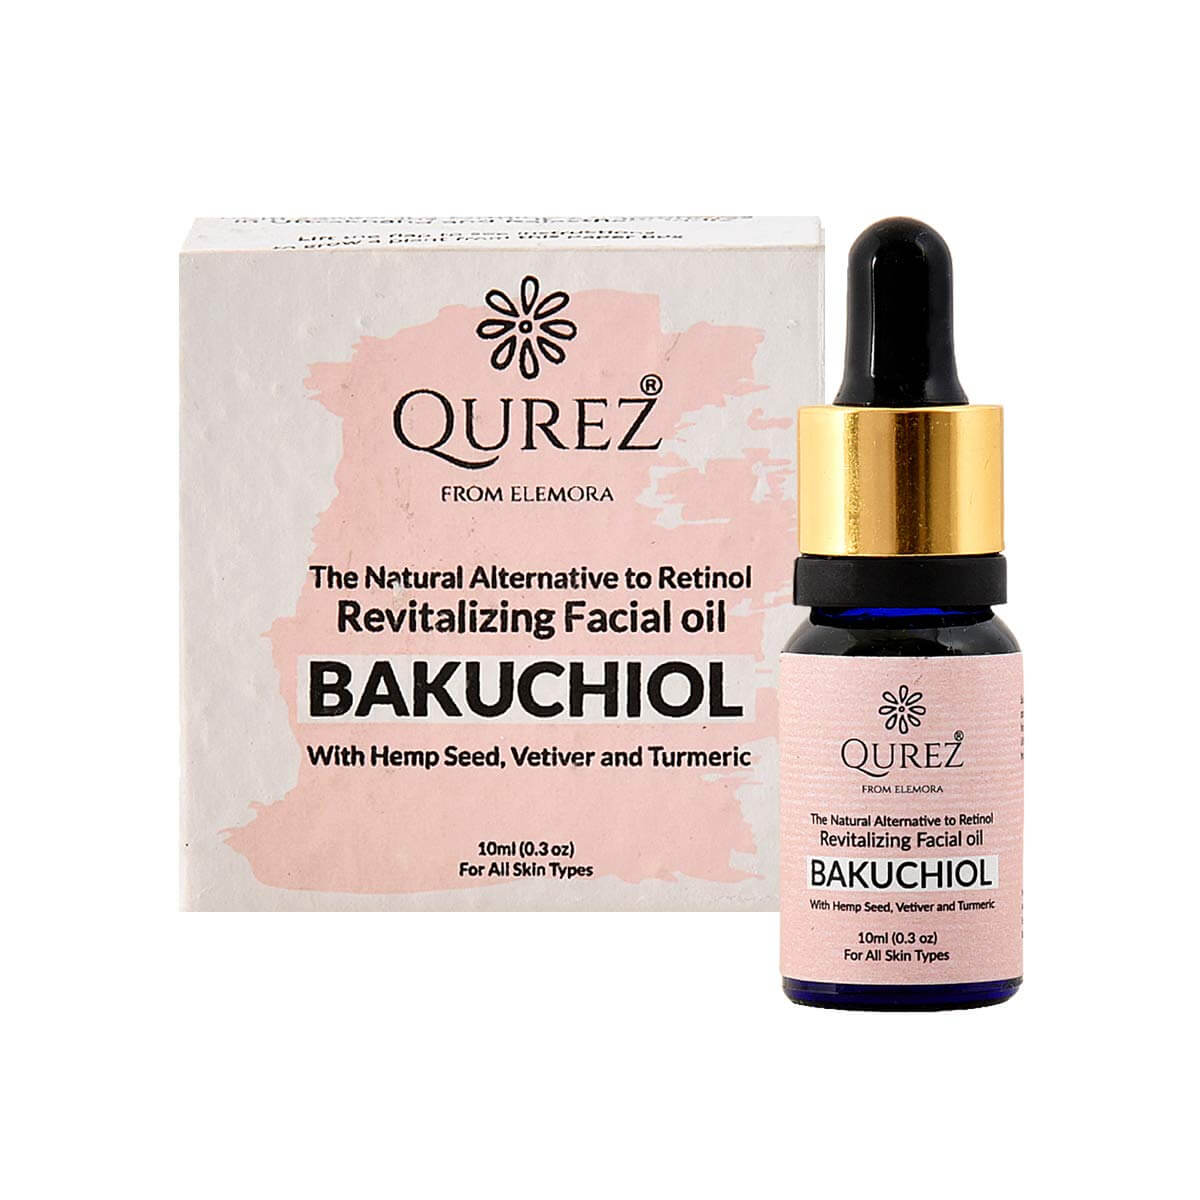 bakuchiol face serum